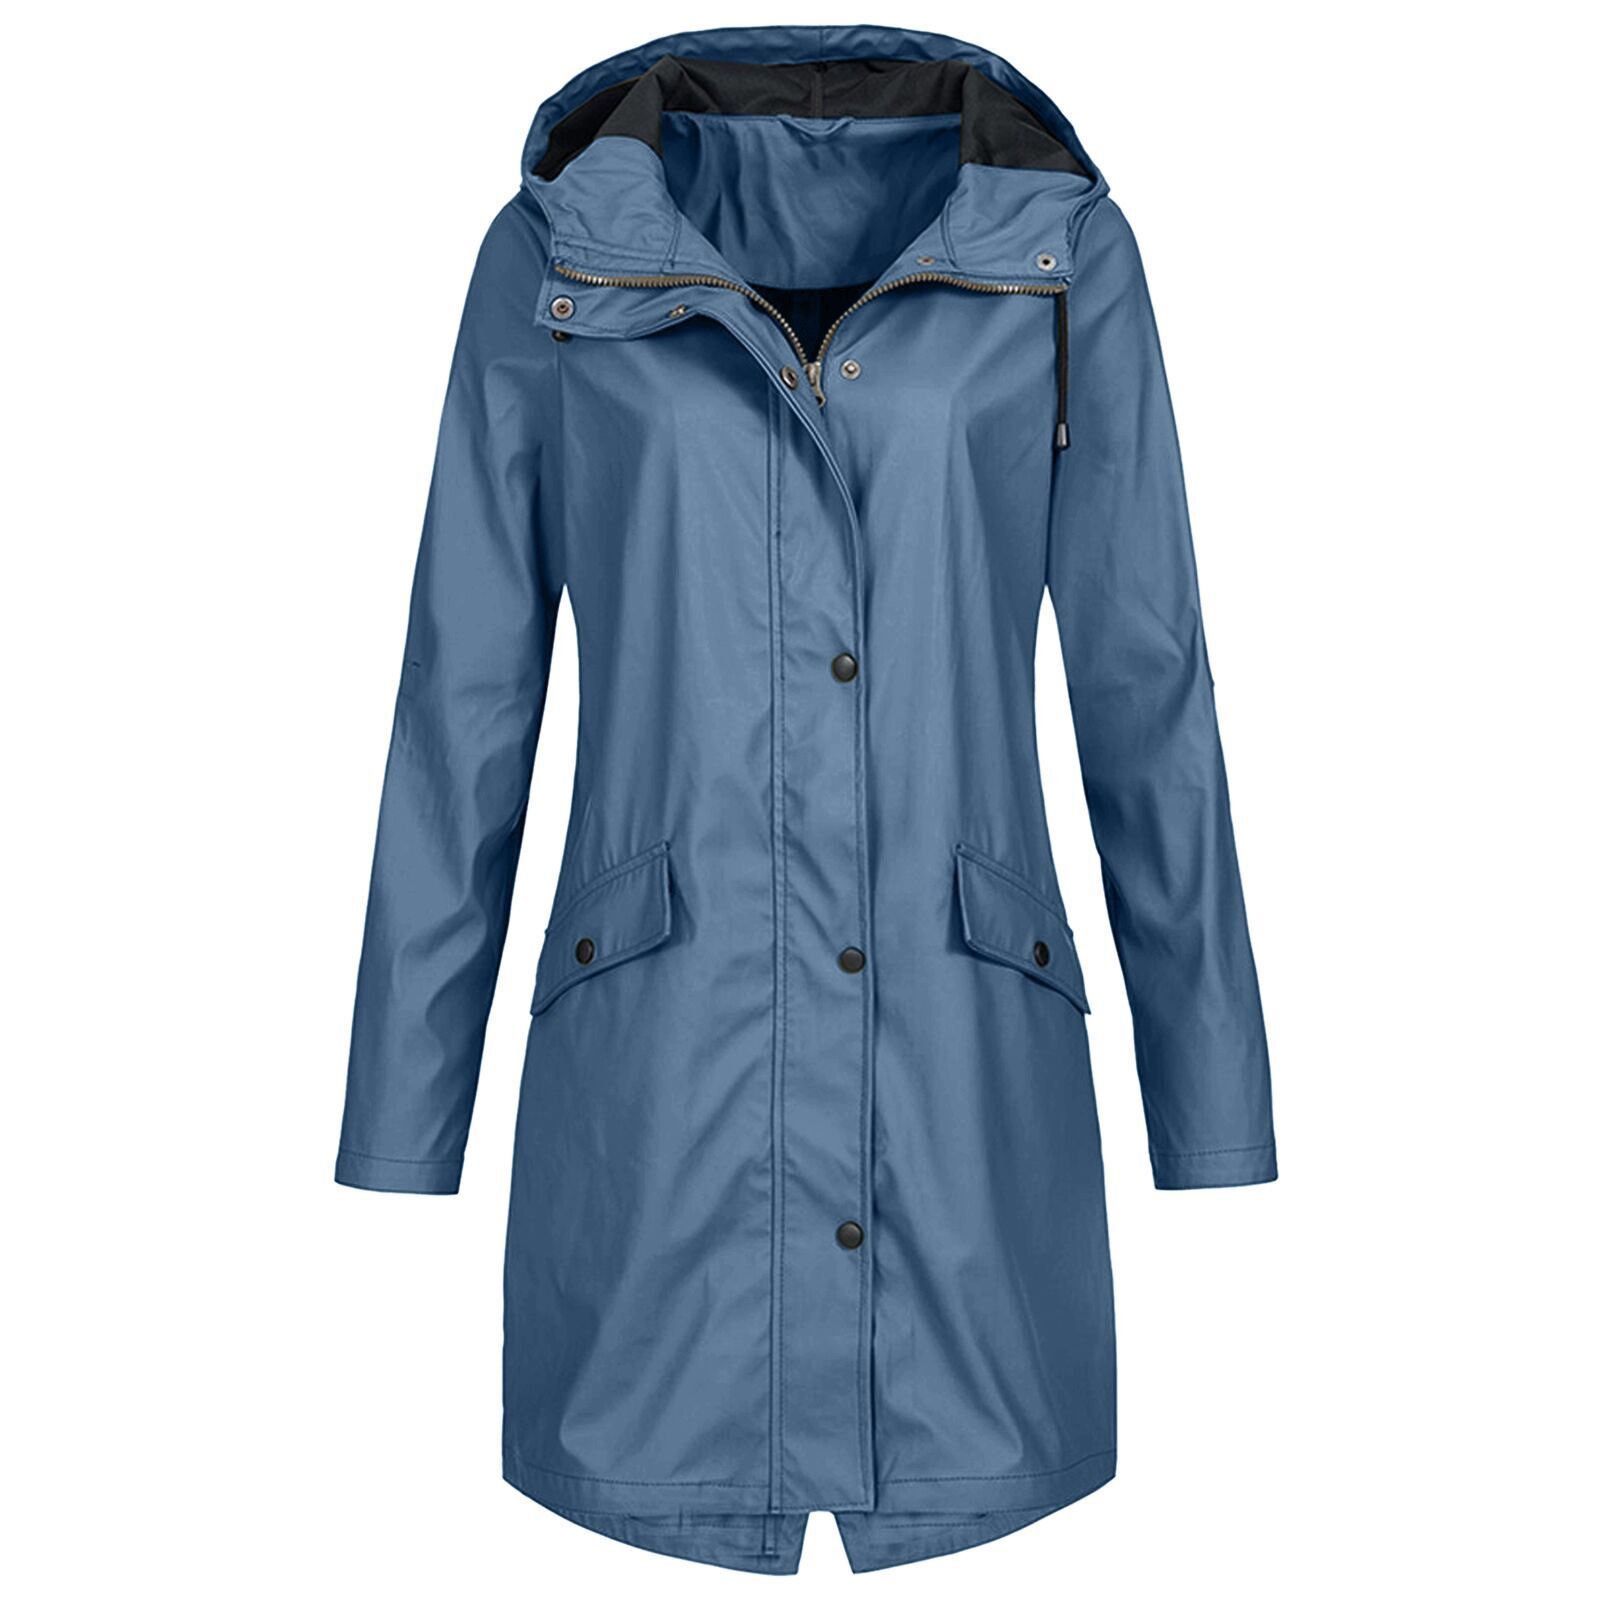 Frostluinai Rain Jackets For Women Waterproof Long Sleeve Lightweight ...